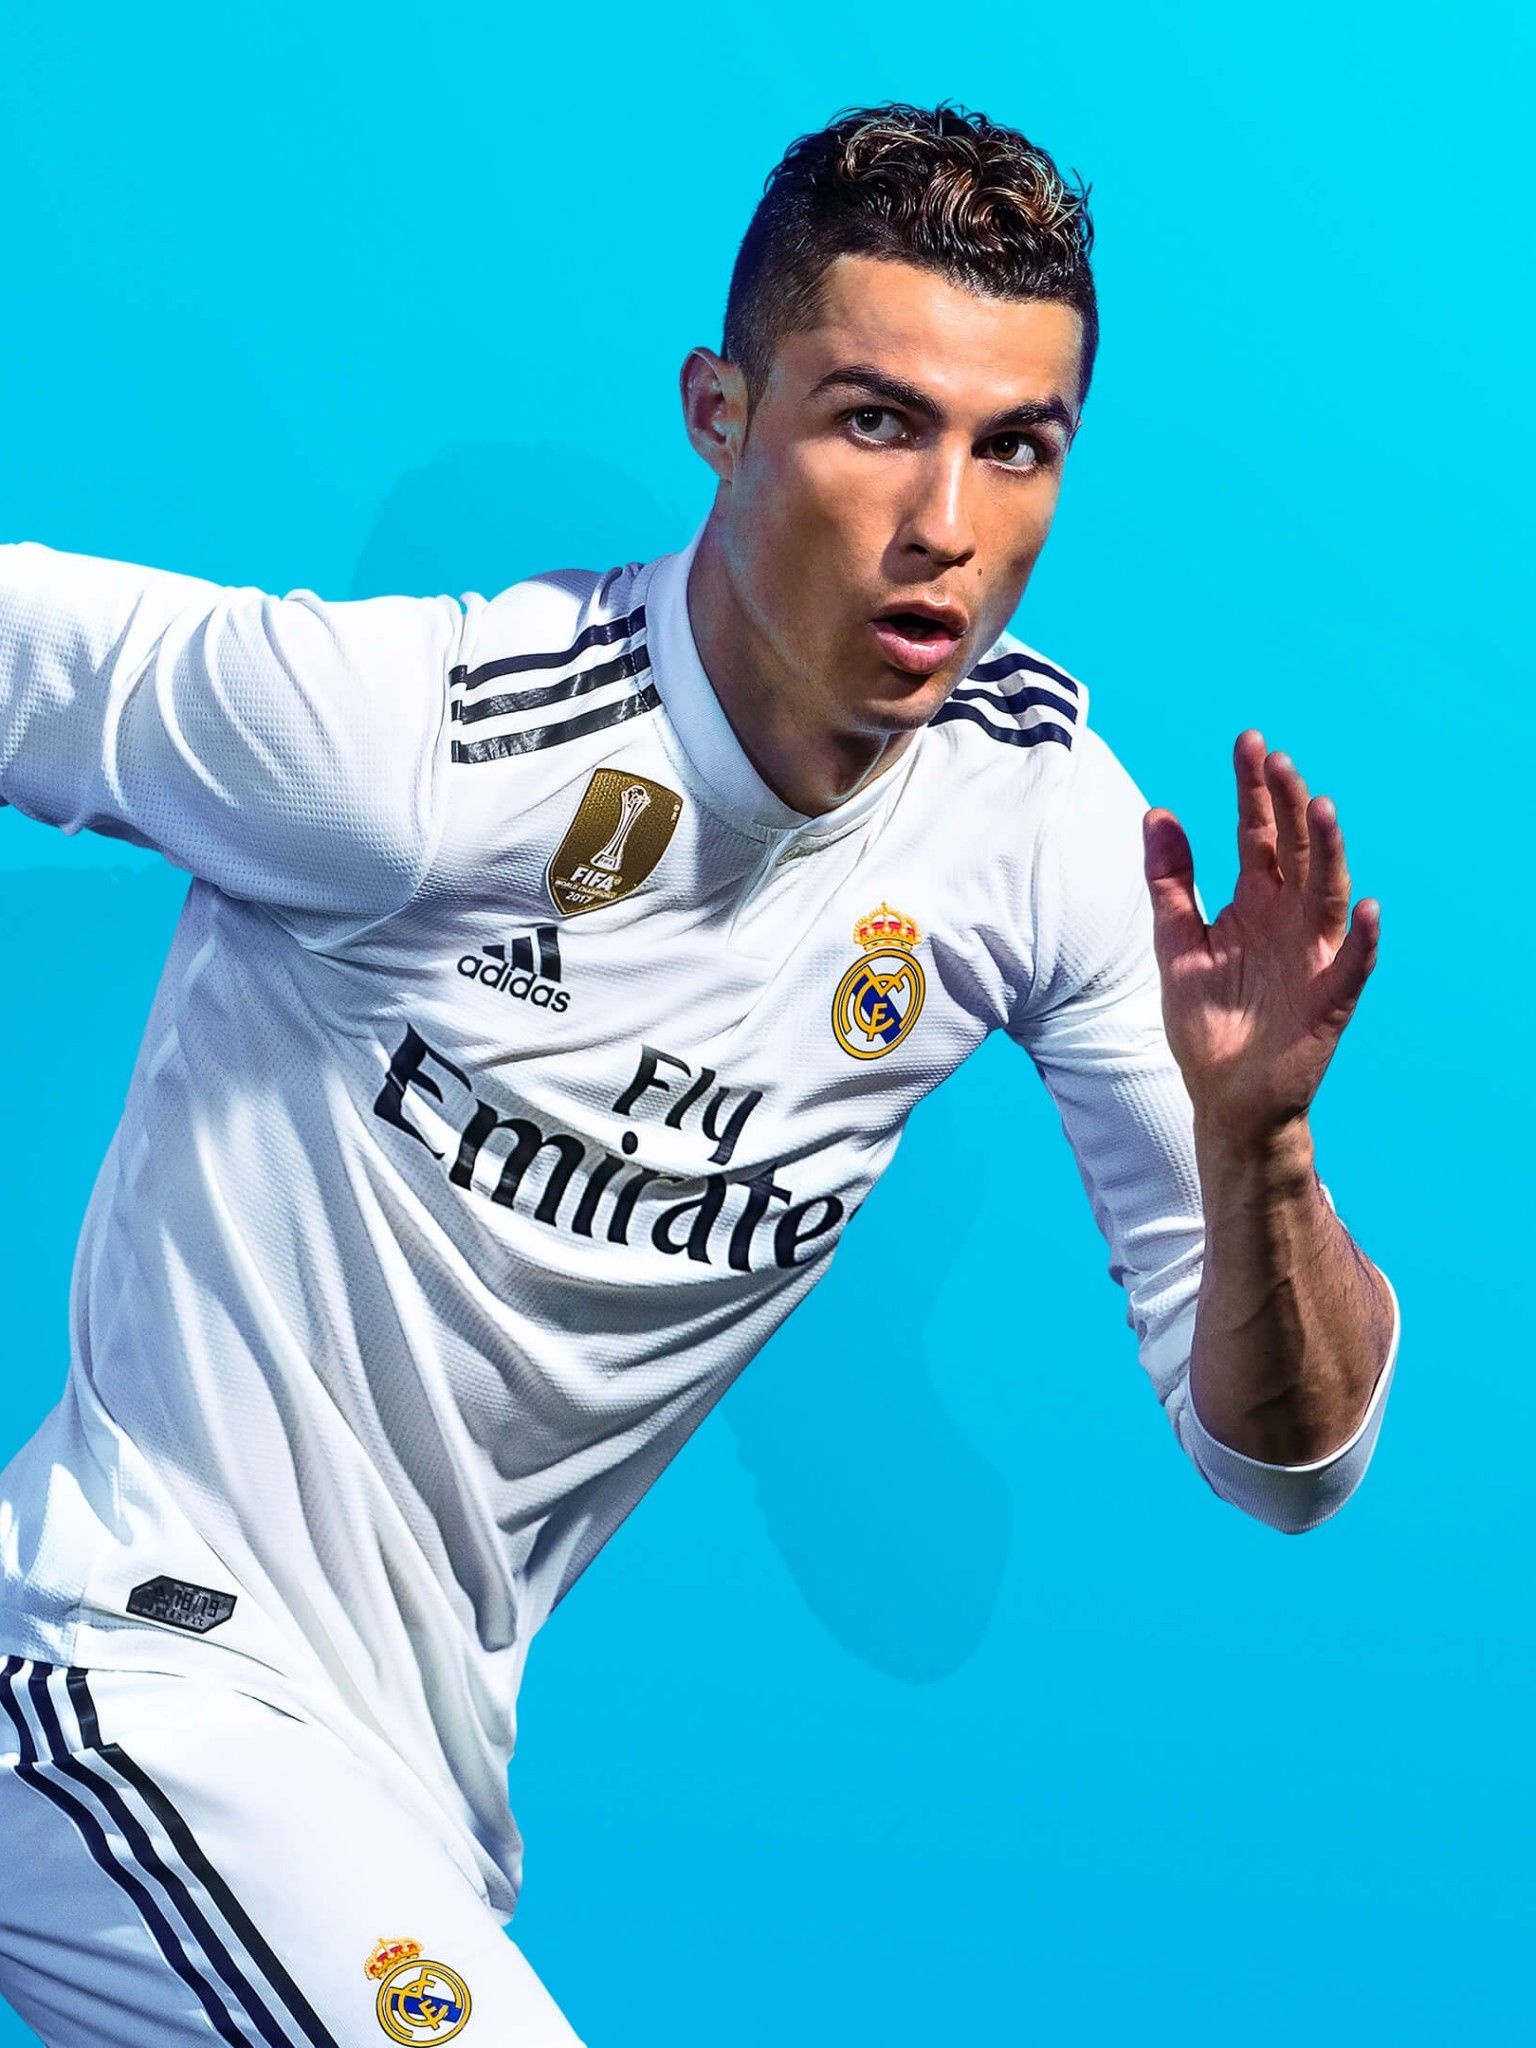 FIFA Soccer (Game): Cristiano Ronaldo, A forward for Premier League club Manchester United, Xbox 360. 1540x2050 HD Wallpaper.